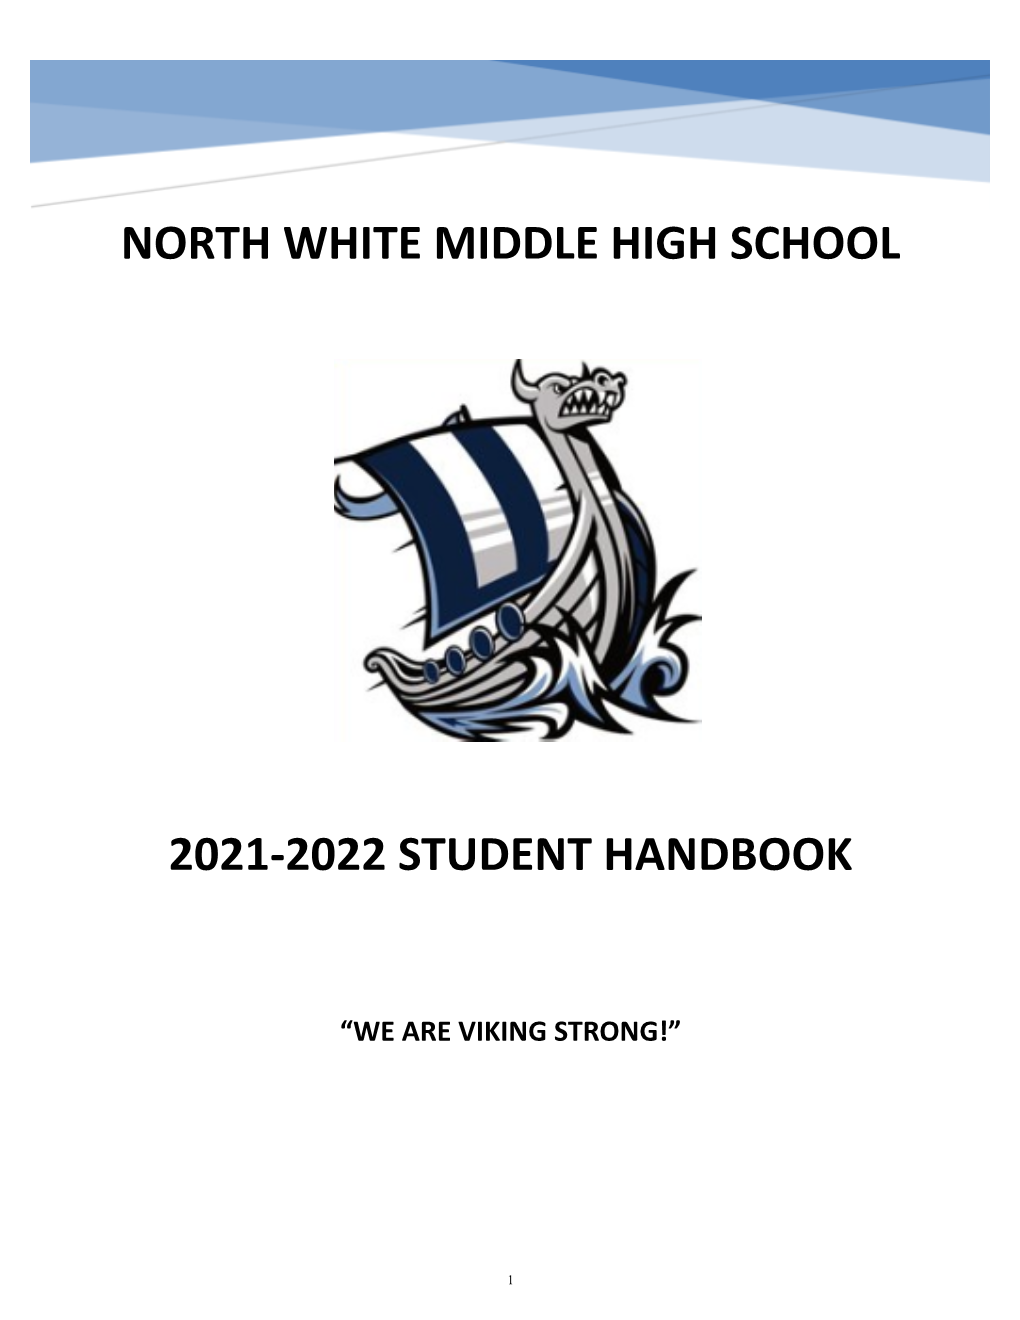 North White Middle High School 2021-2022 Student Handbook